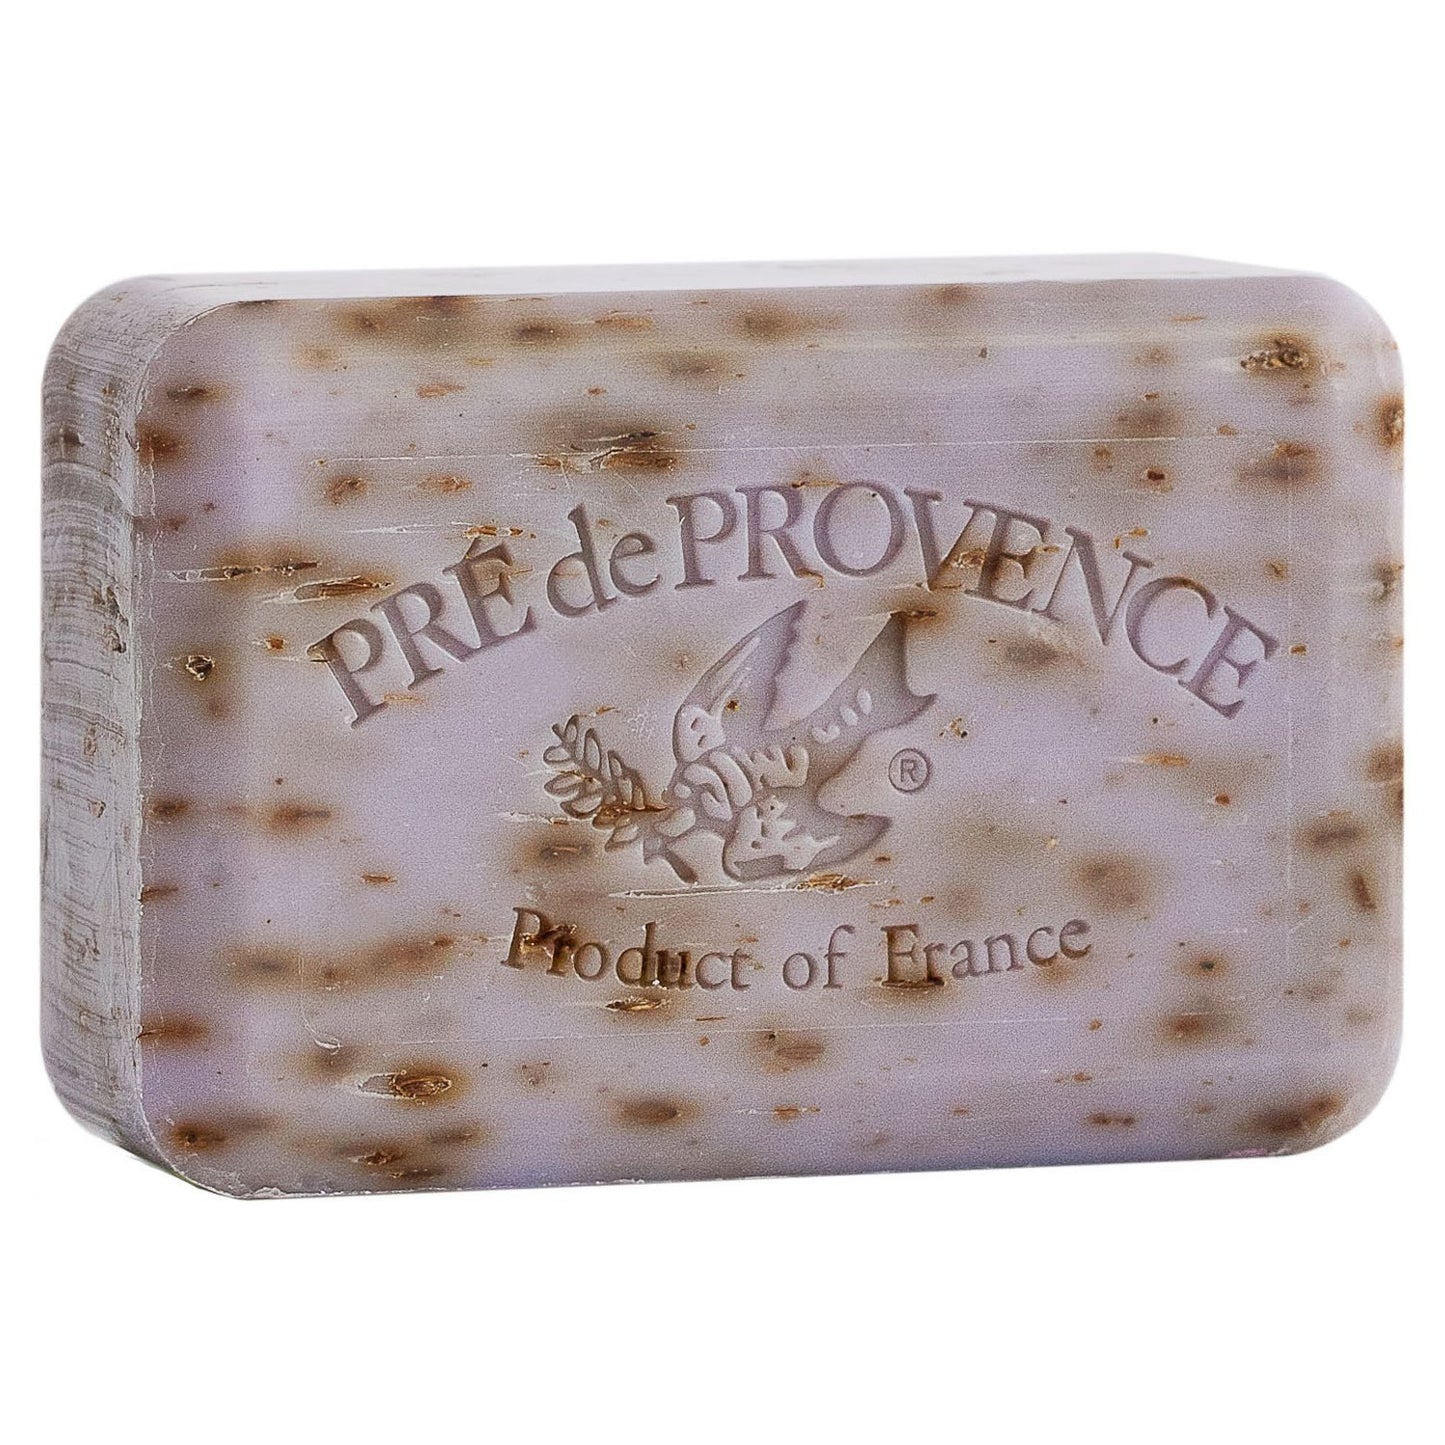 Pre de Provence Lavender 250g Soap - Royalties